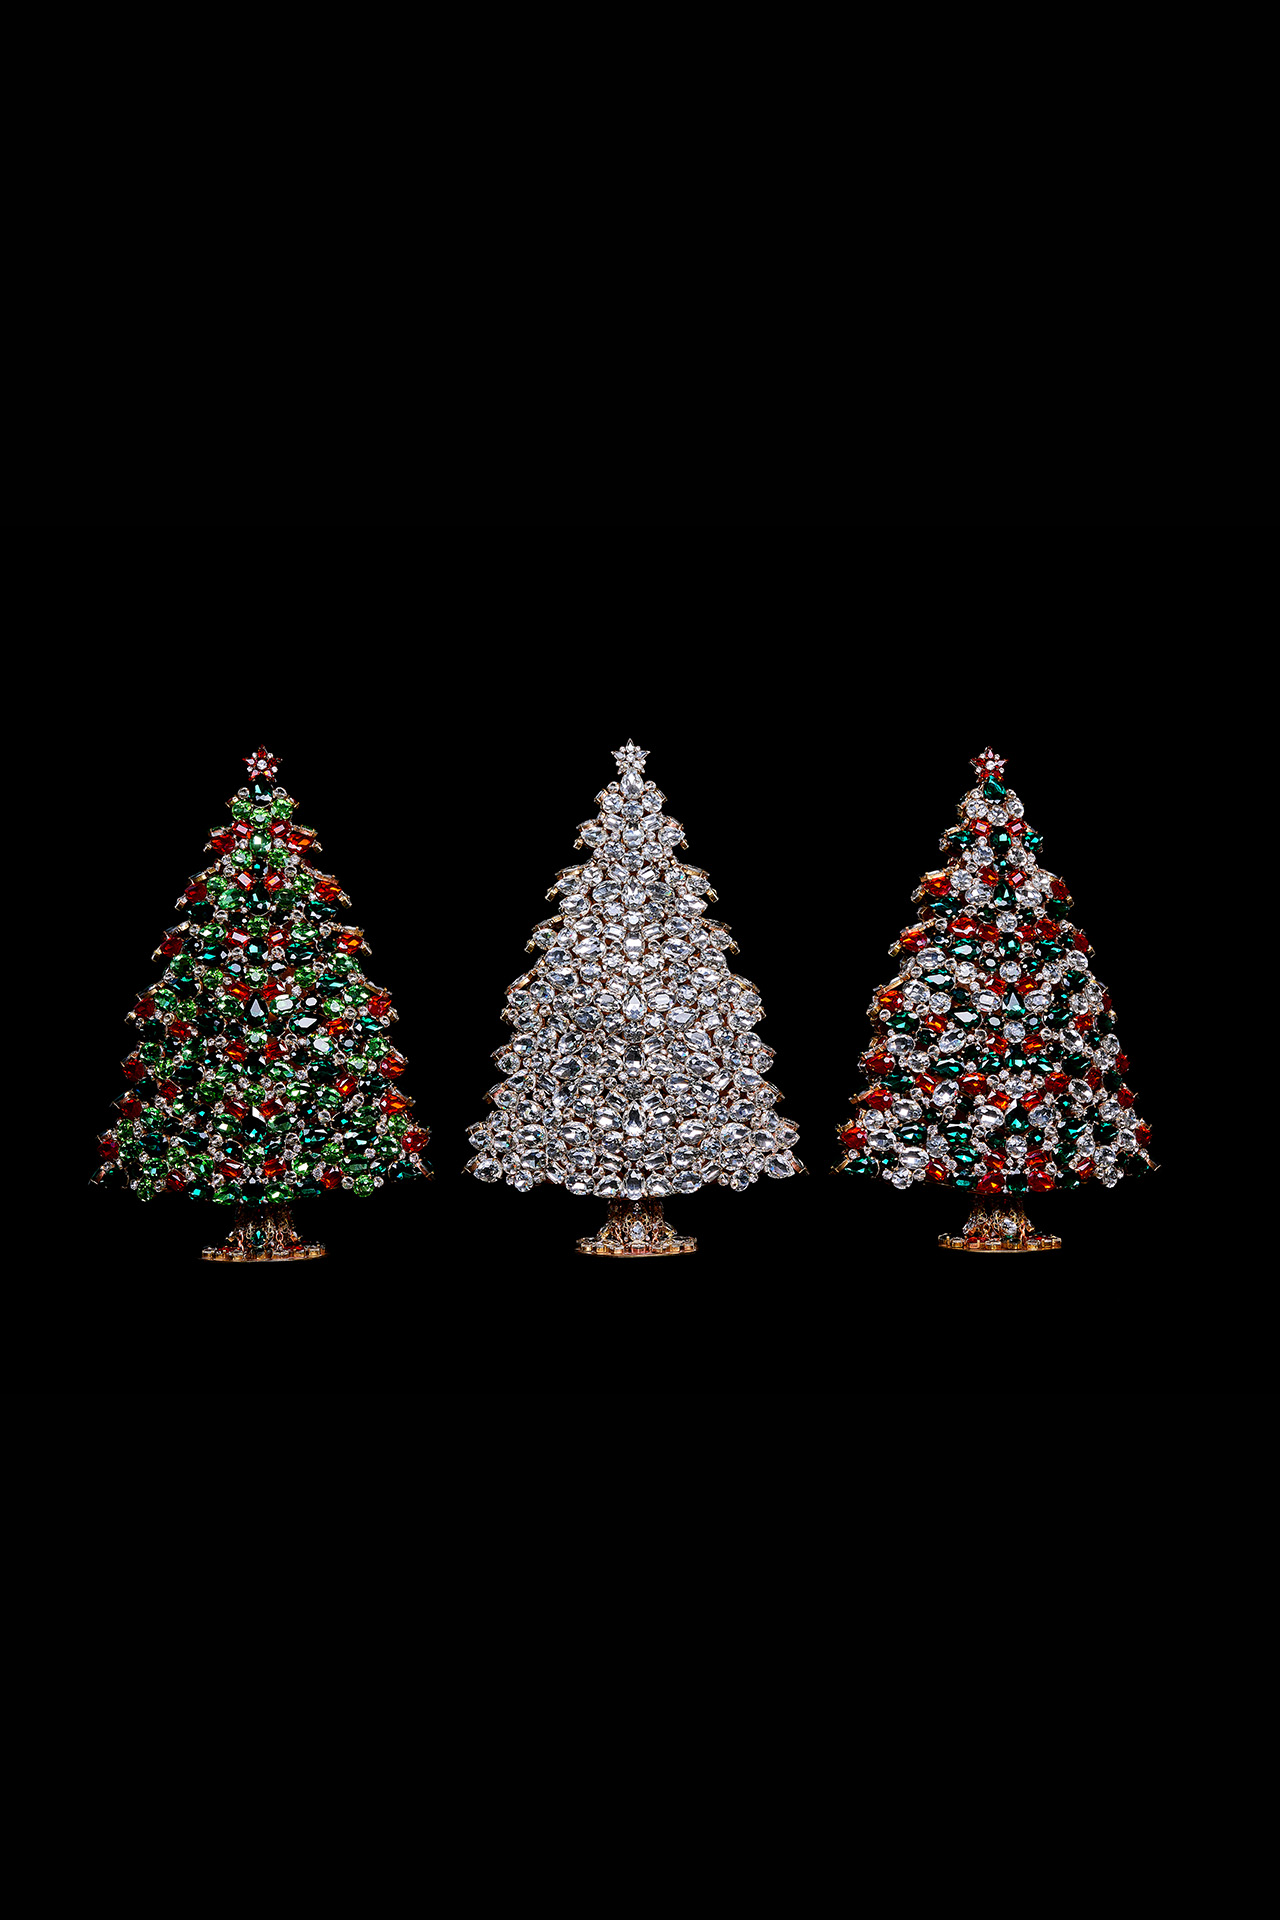 Handcrafted unique 3D design Christmas decoration - clear